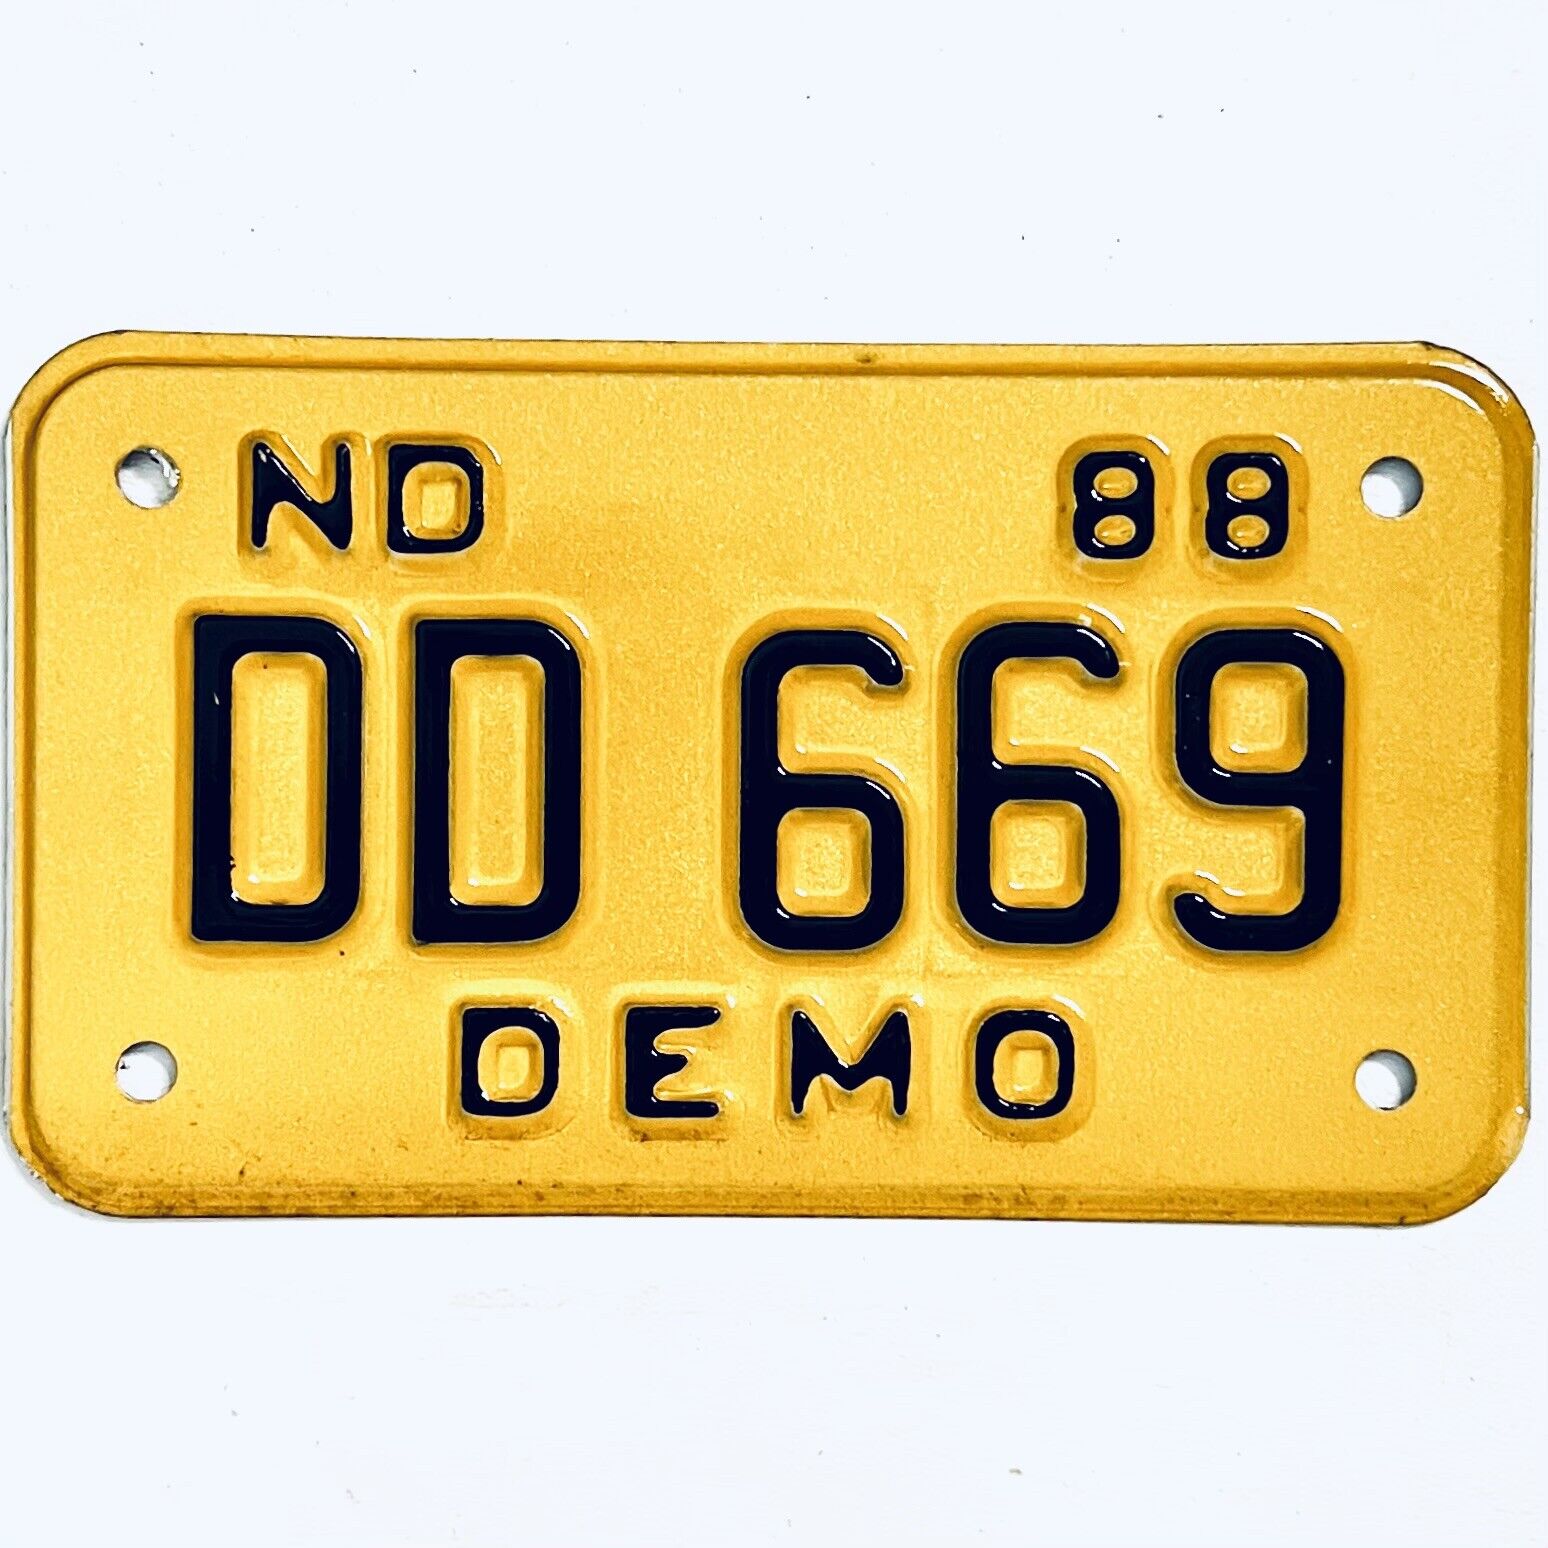 1988 United States North Dakota Demo Special License Plate Dd 669